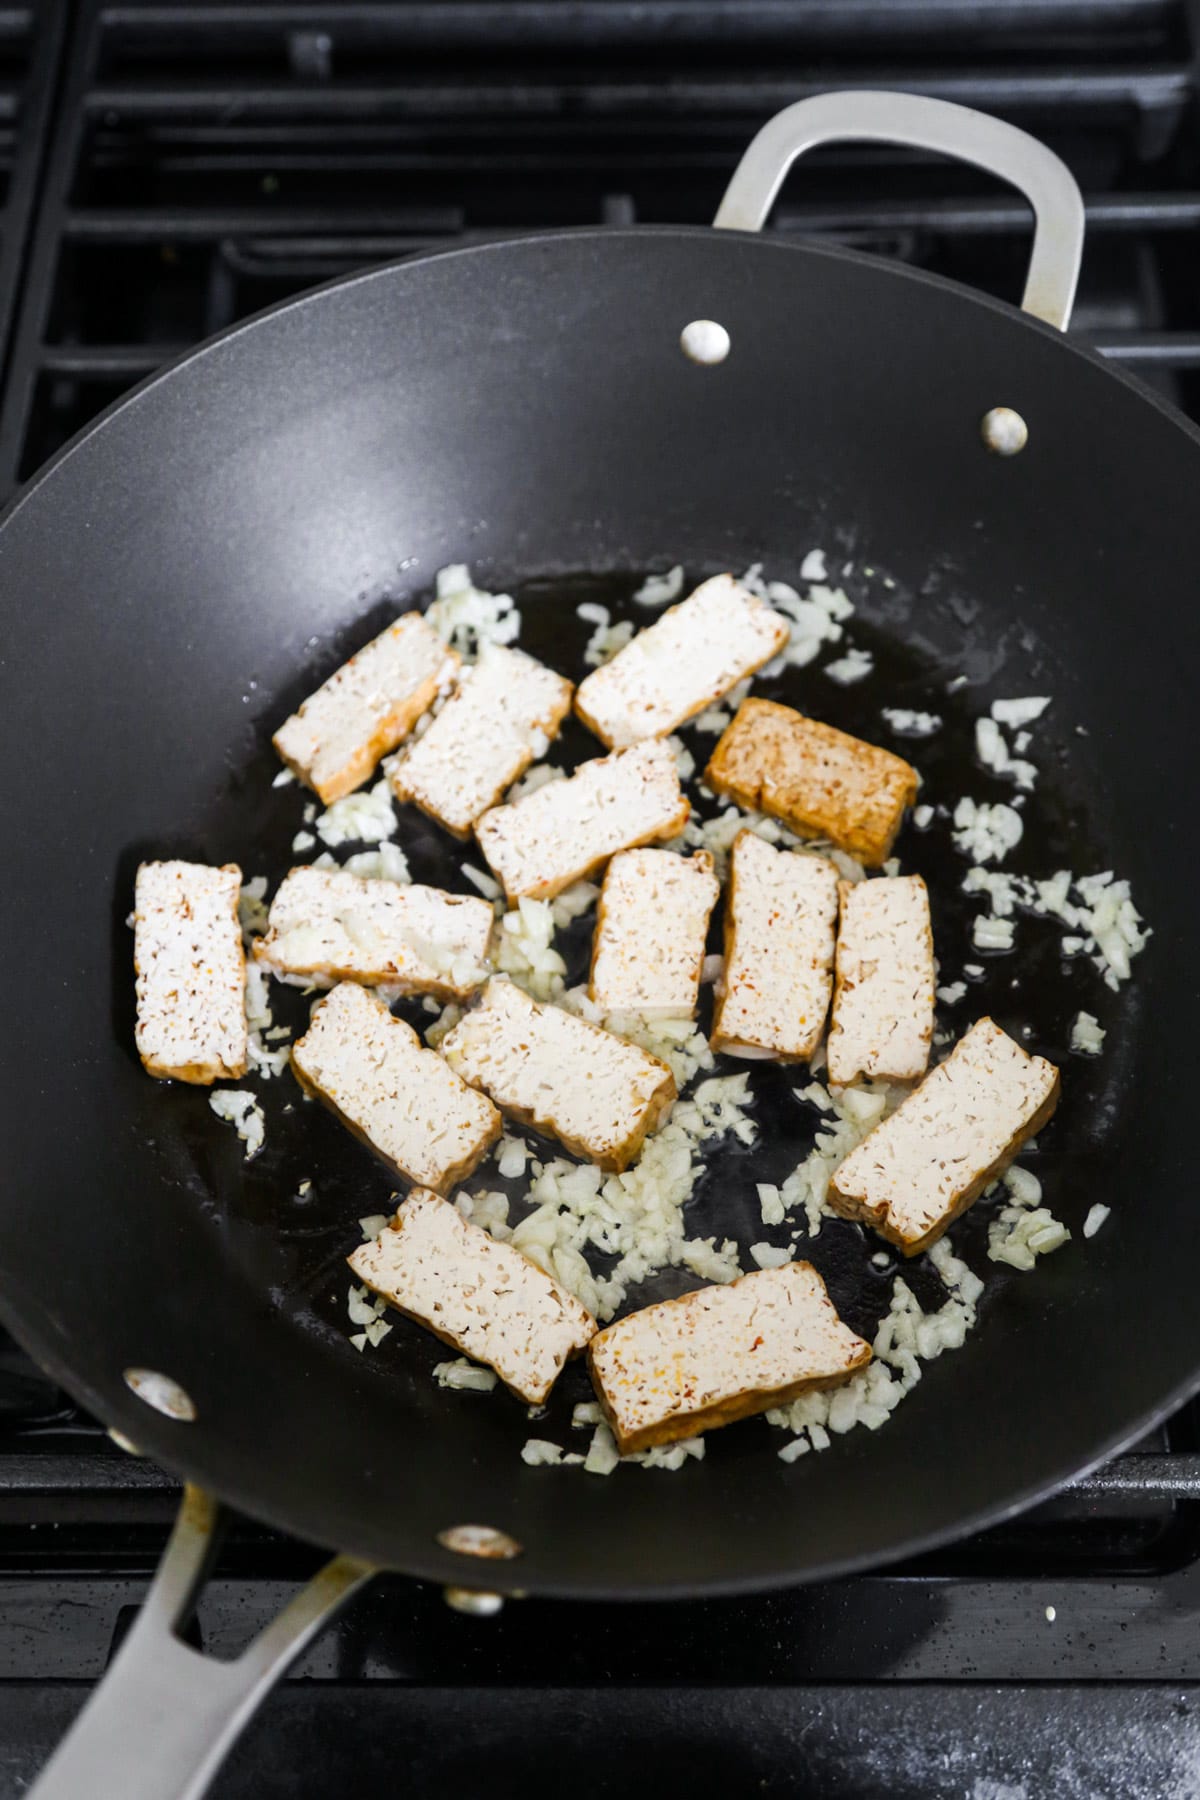 Smoked tofu and garlic in skillet